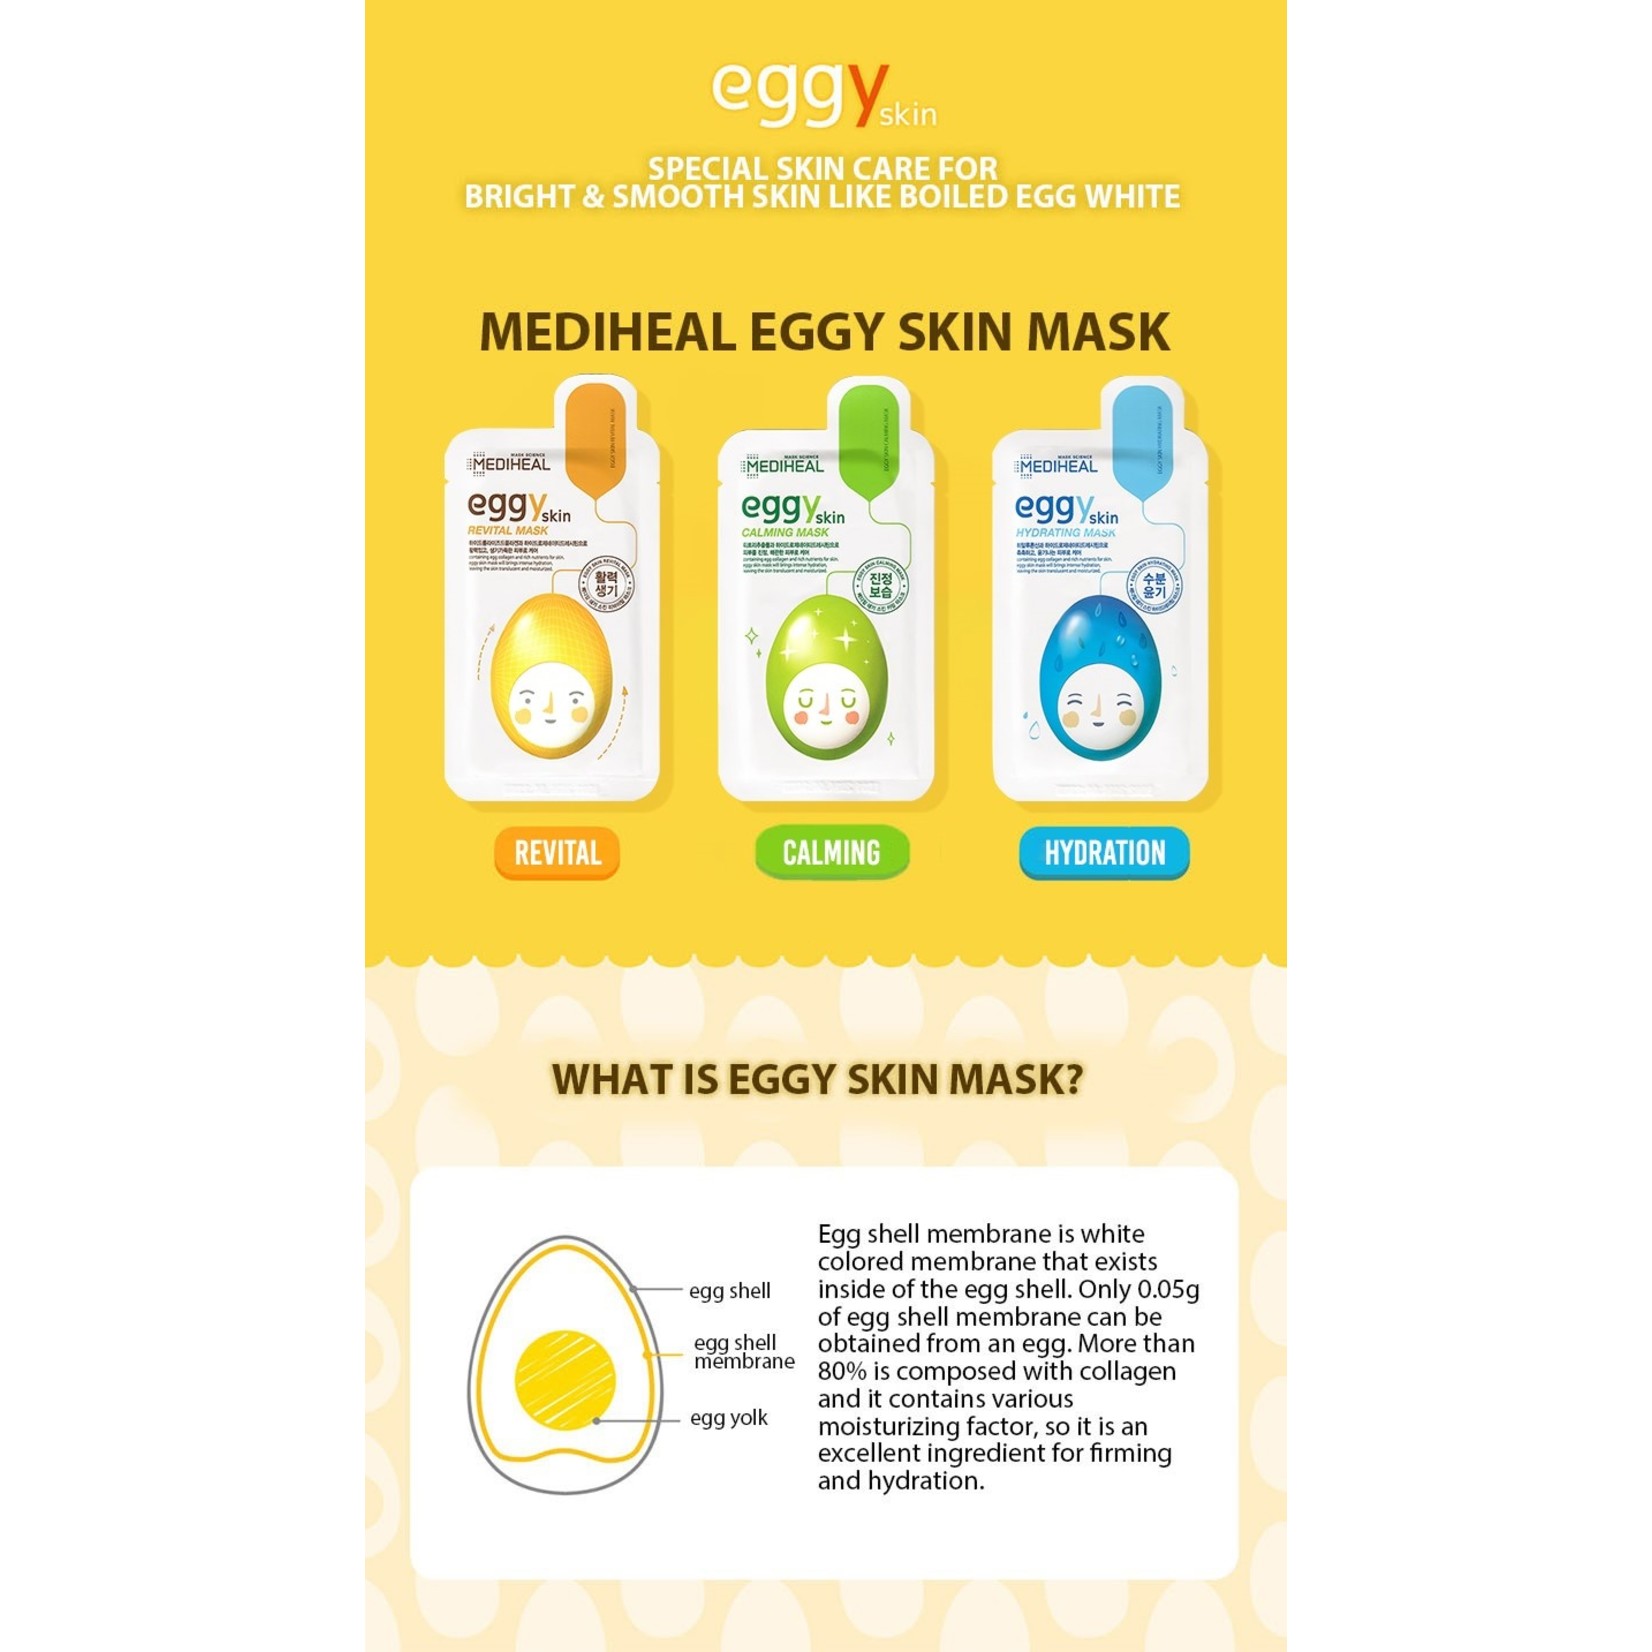 Mediheal eggYskin Calming Mask (Neue Verpackung)